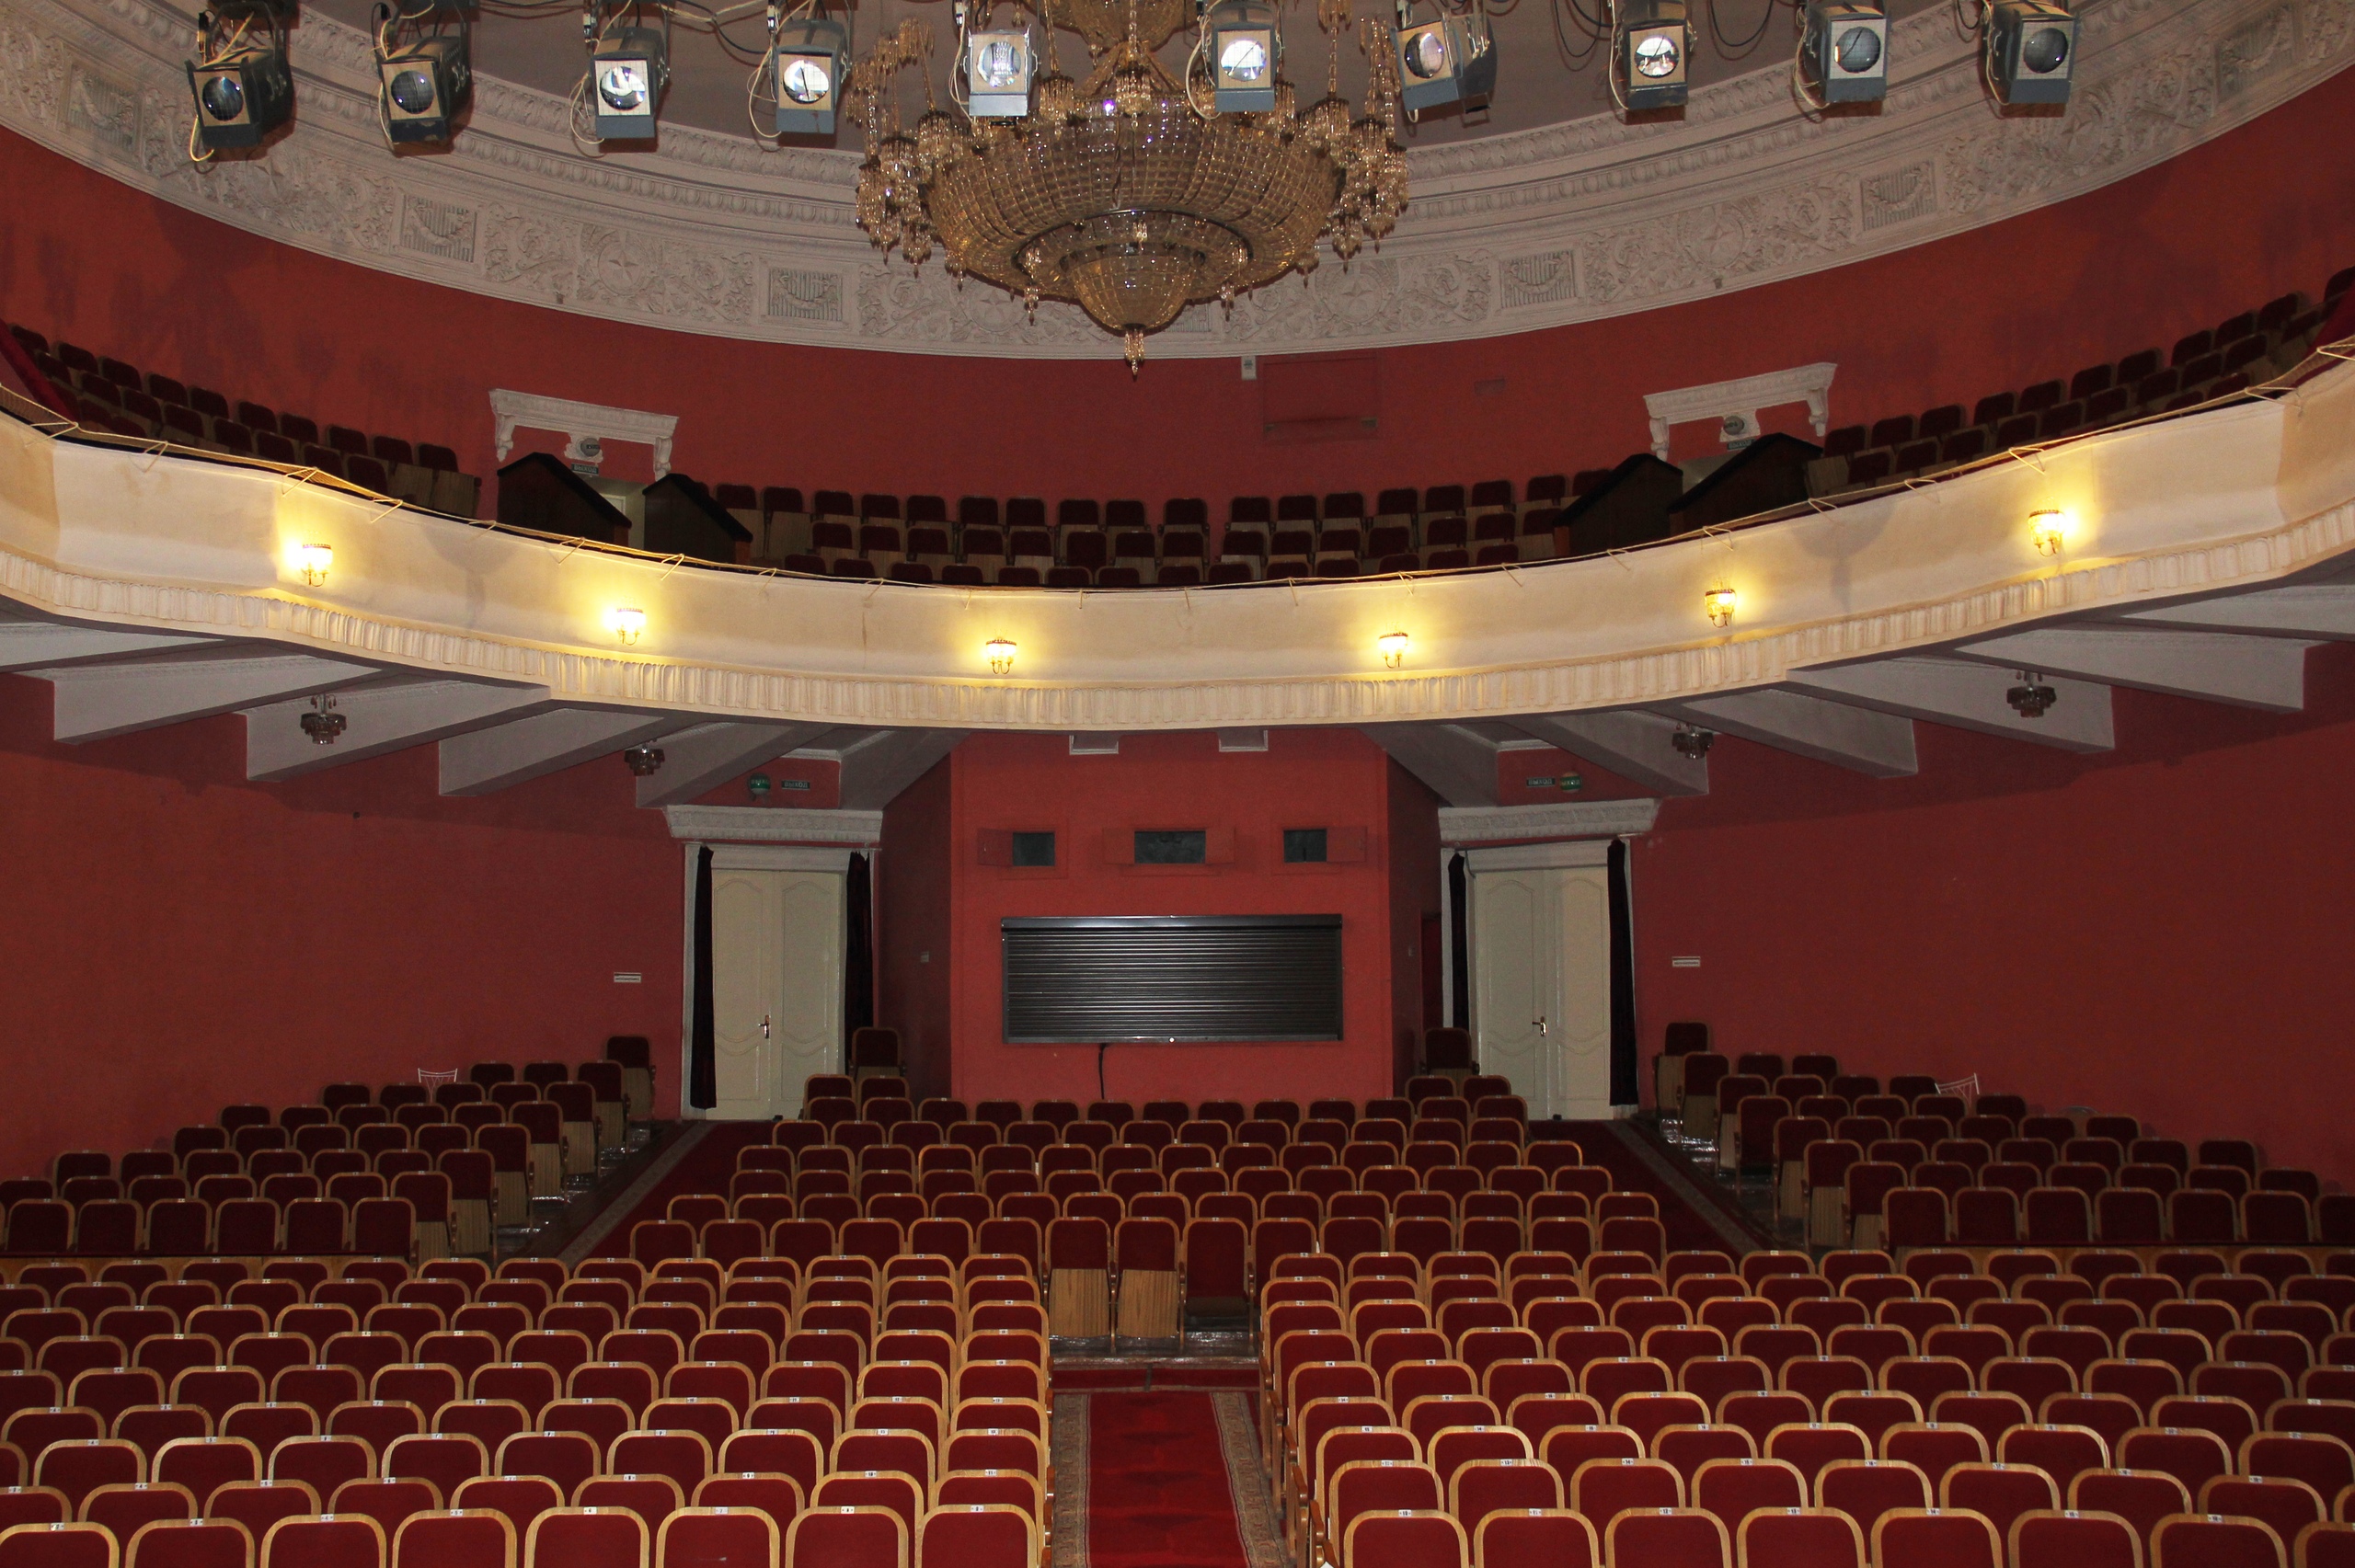 калужский драматический театр фото зала